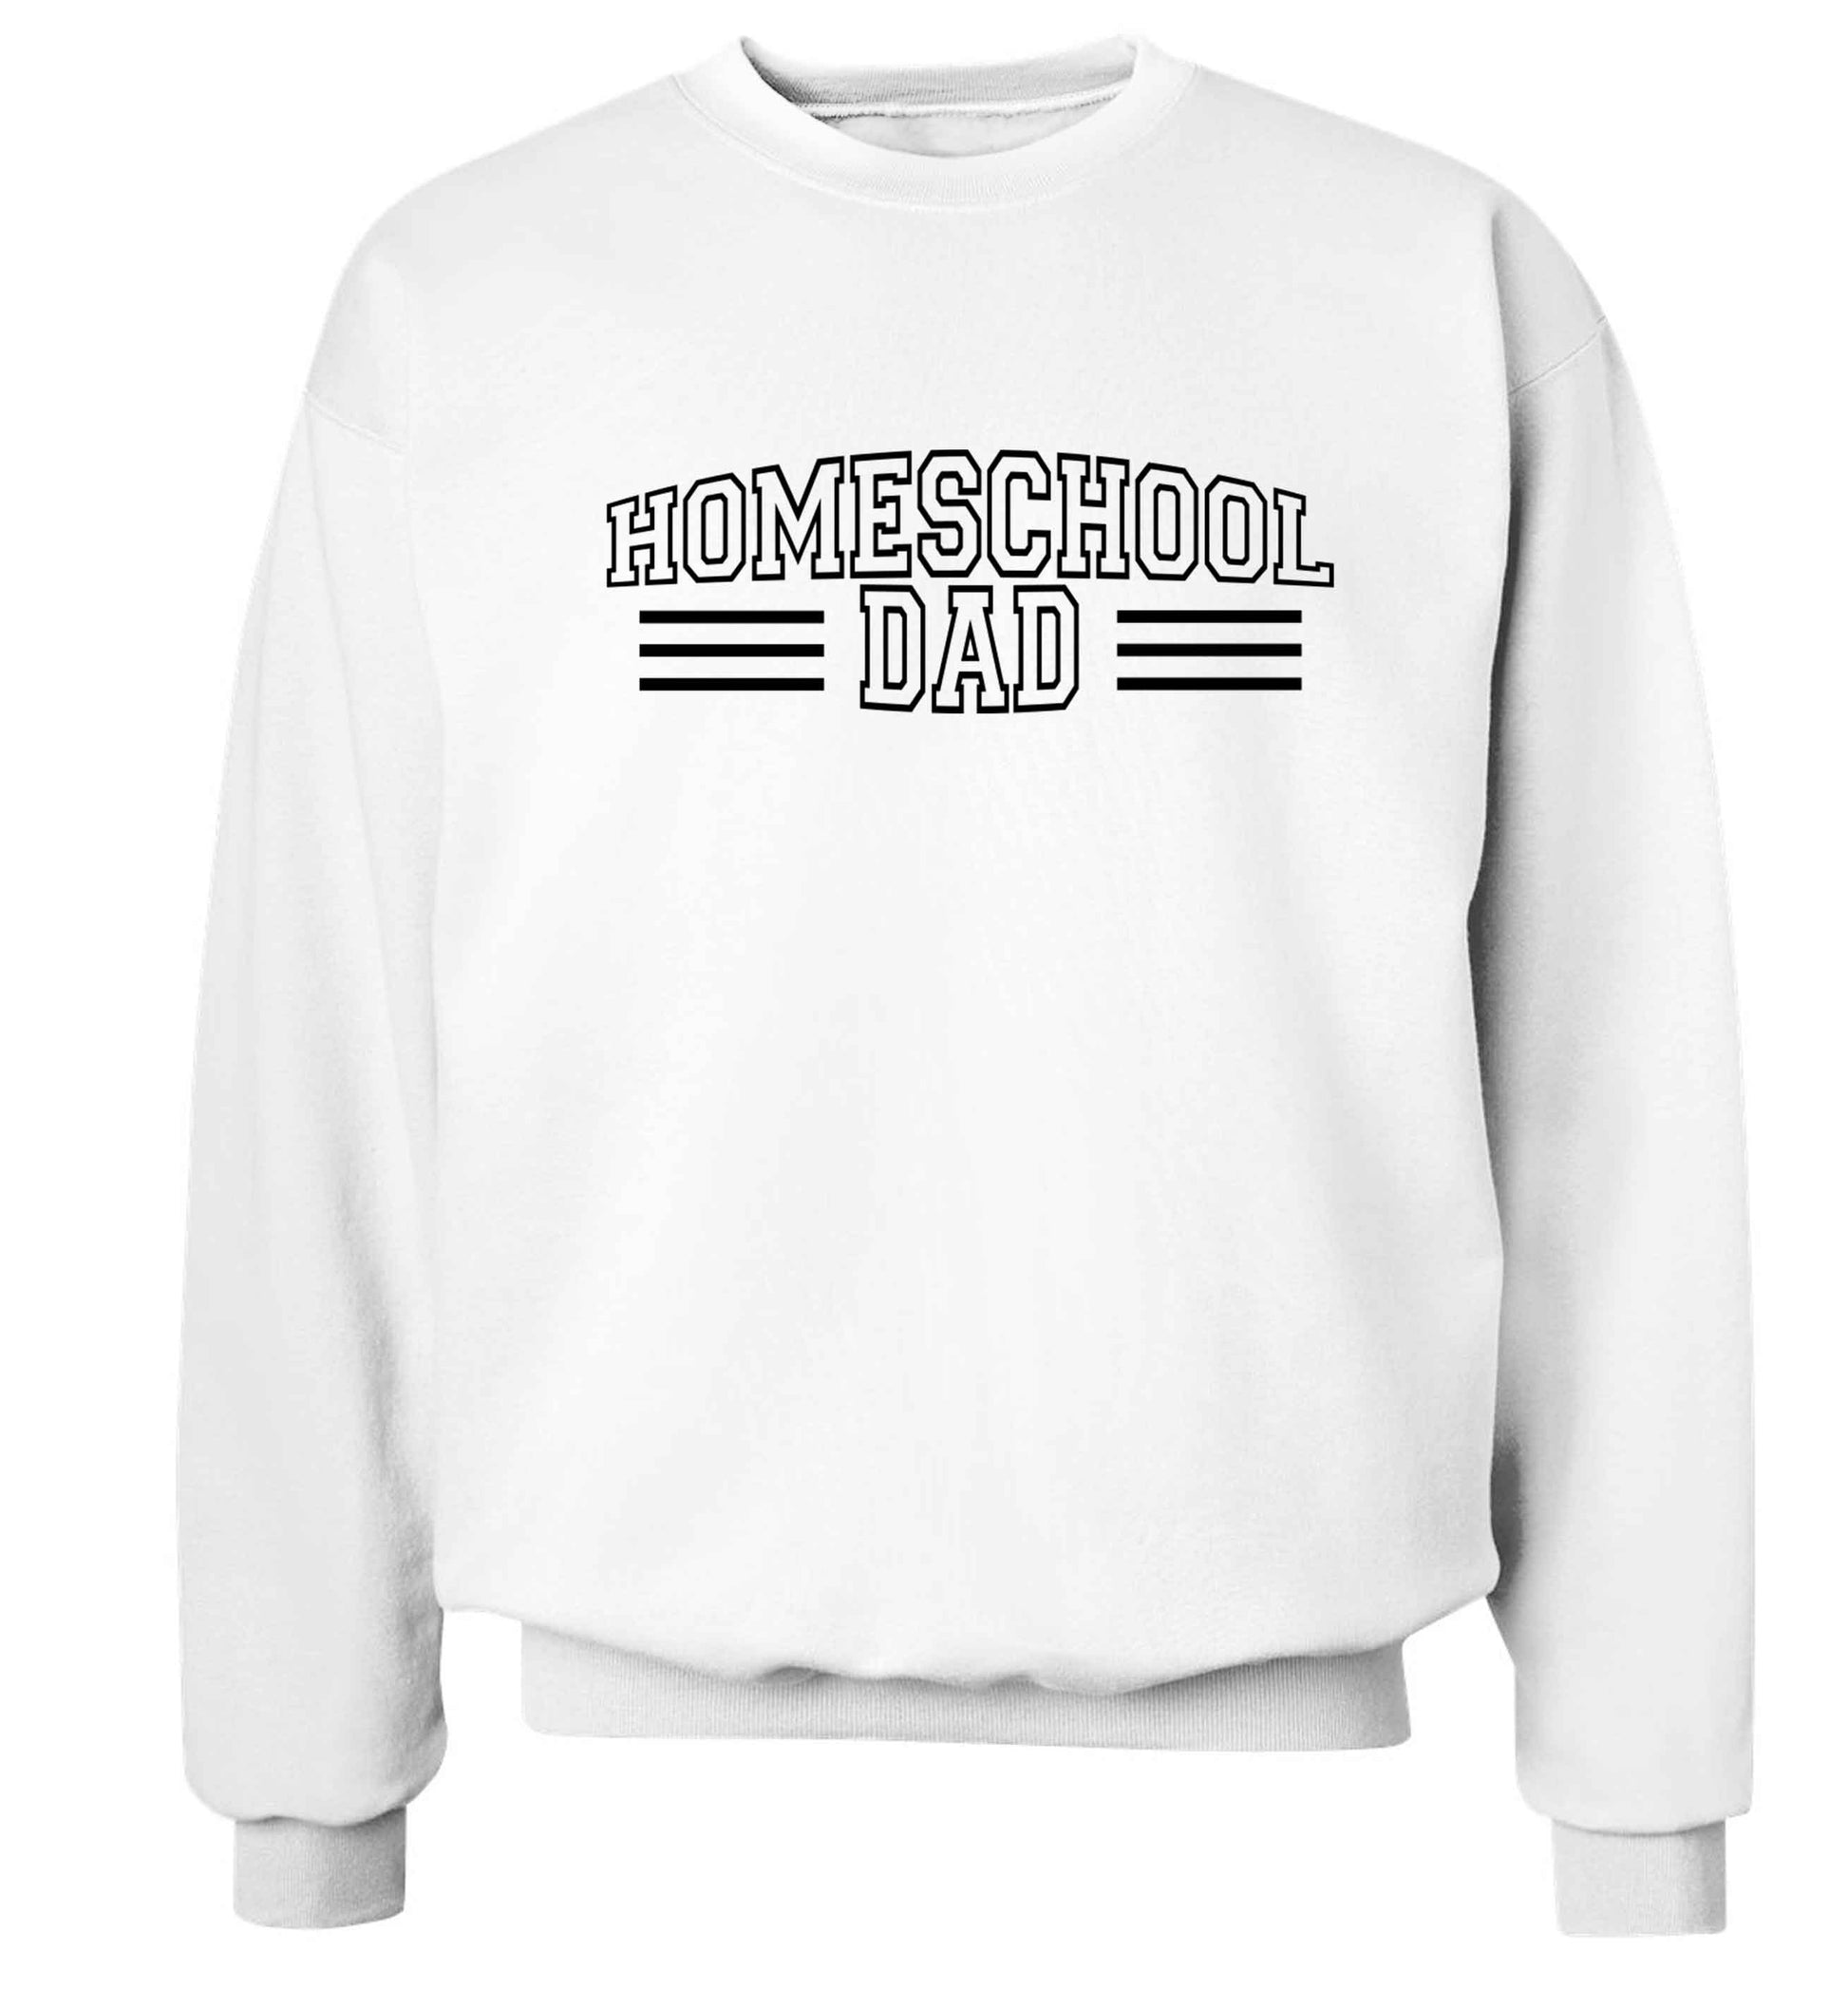 Homeschool dad Adult's unisex white Sweater 2XL